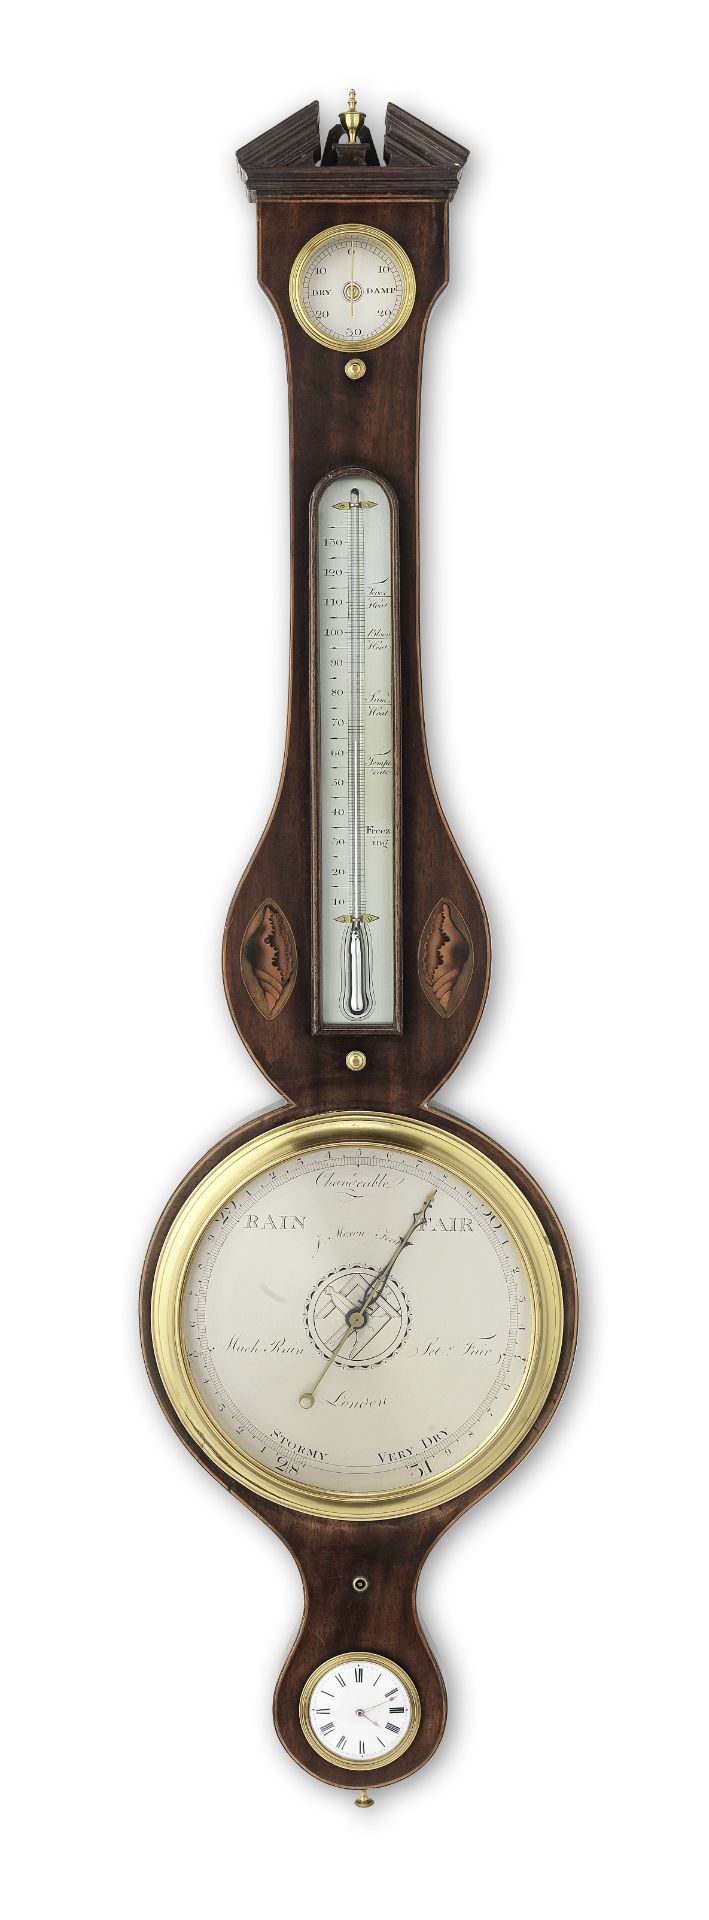 A rare late 18th century mahogany wheel barometer with inset watch signed J. Moxon fecit, London